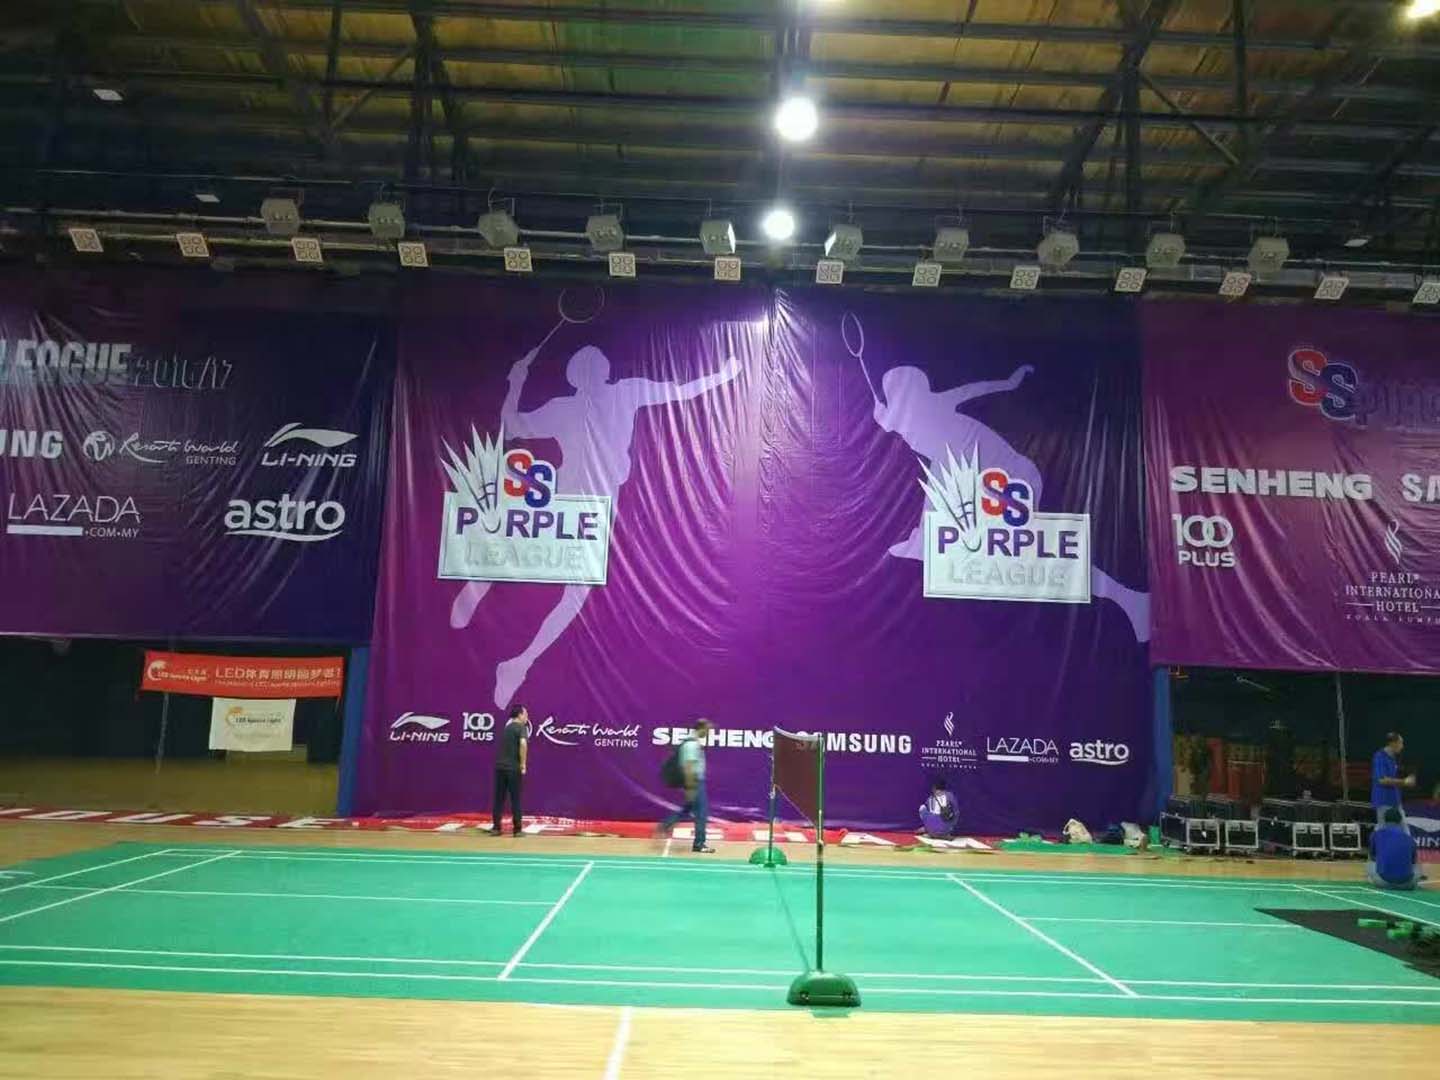 Malaysia SS Purple League Badminton Match